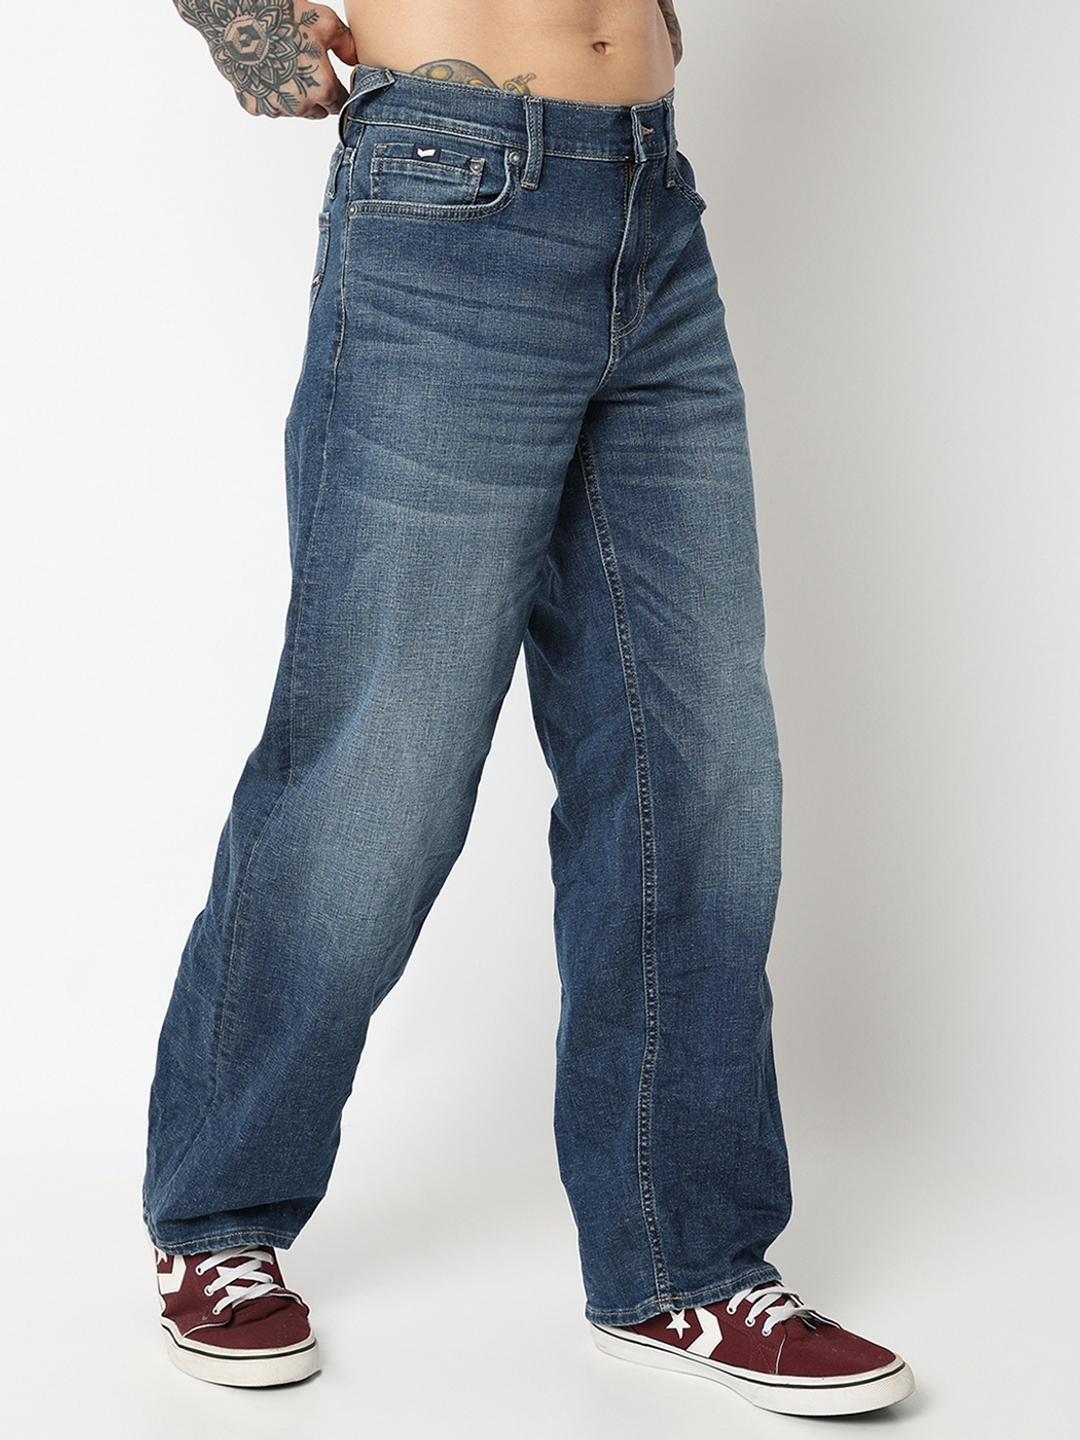 MEN'S JAGGER IN Jeans